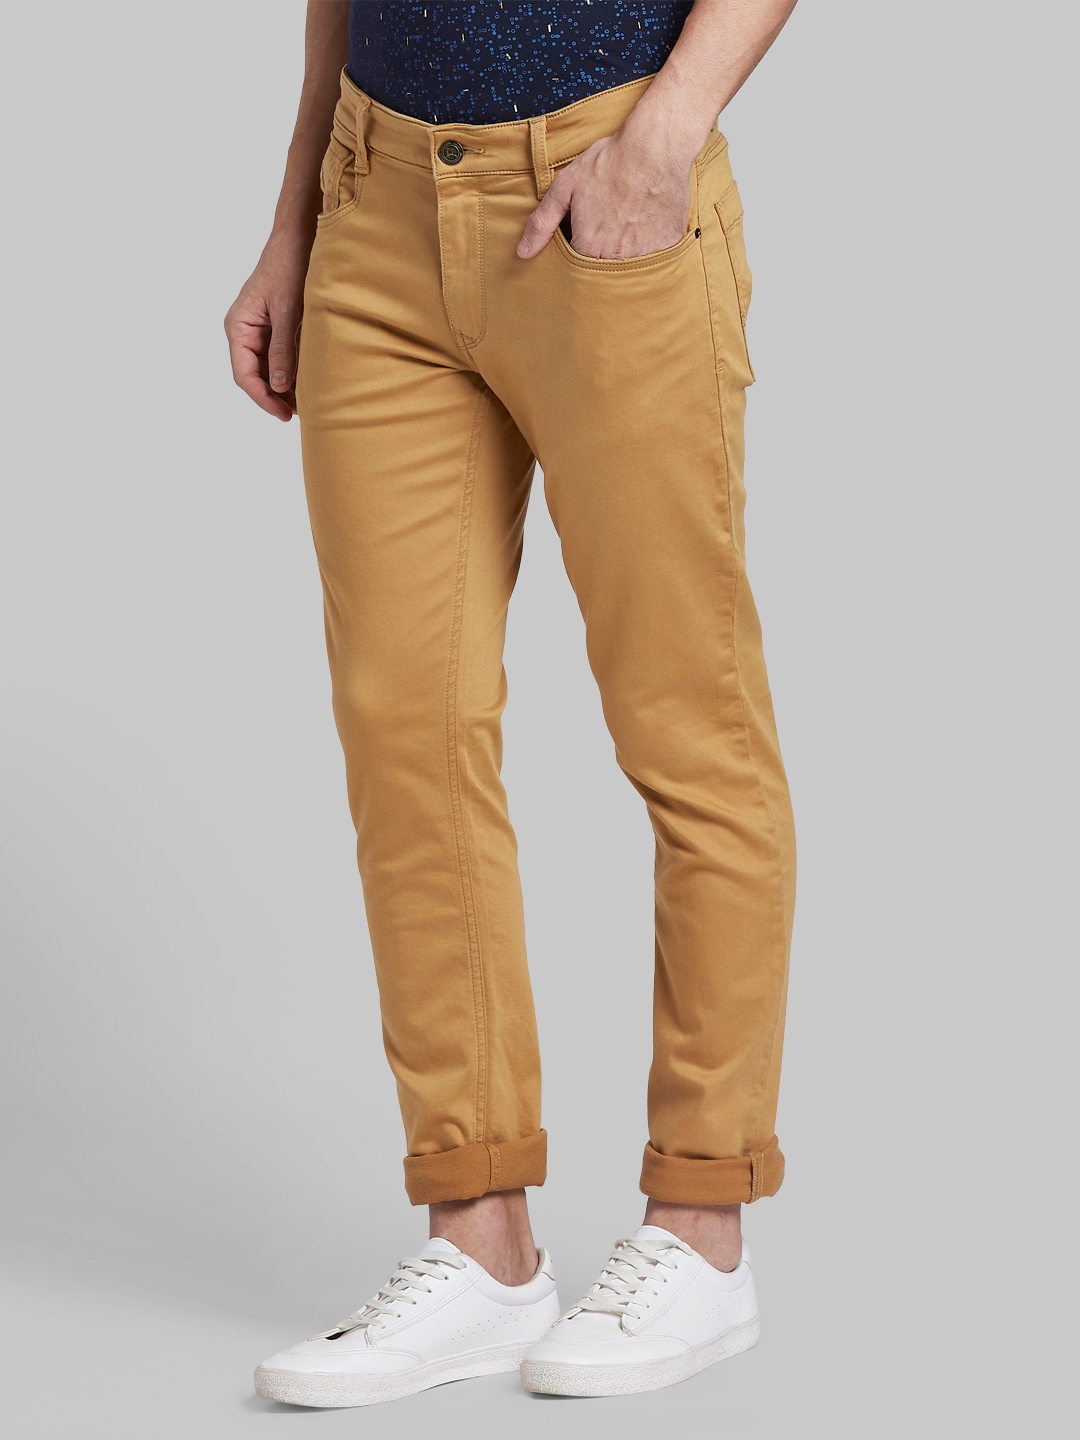 PARX | PARX Medium Khaki Jeans 2